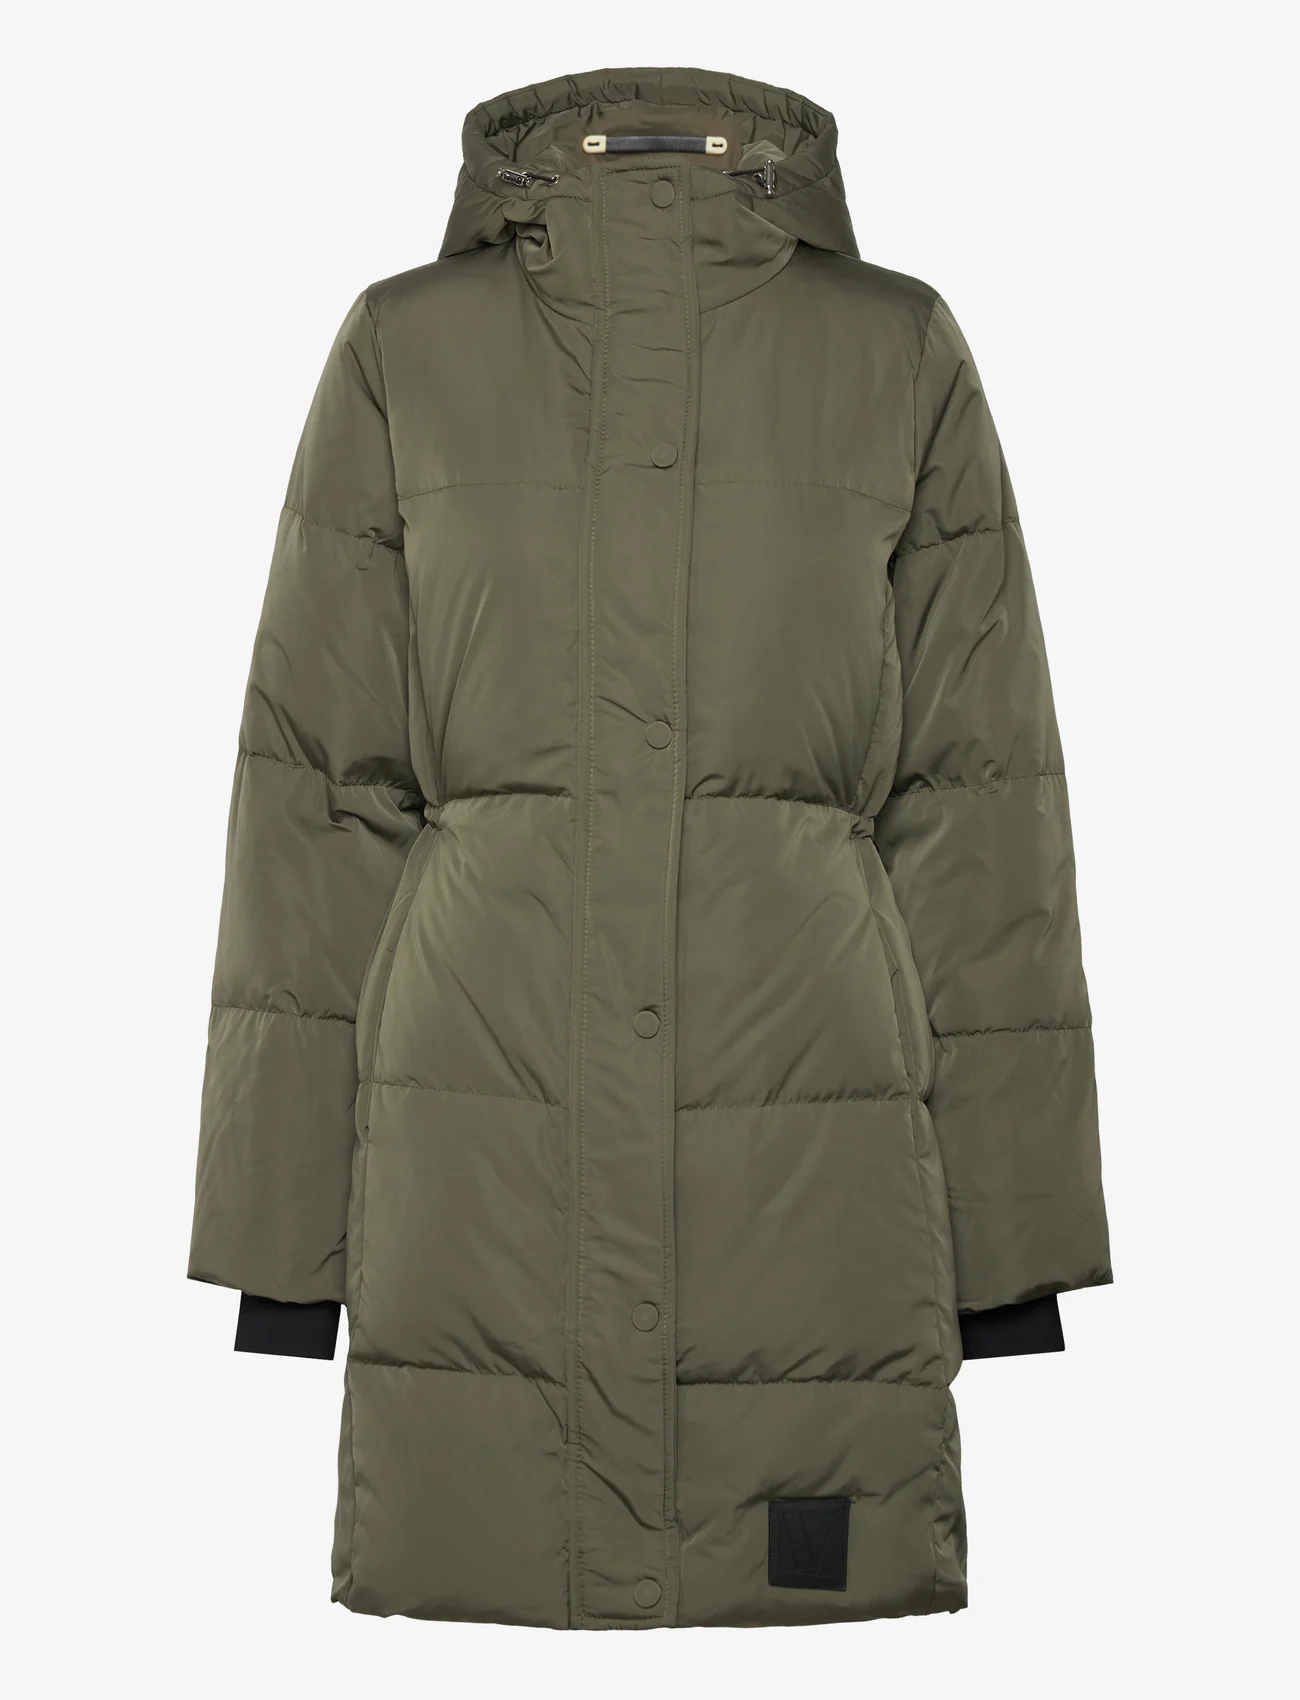 InWear - PhyllysIW Classic Coat - winter jackets - beetle green - 0